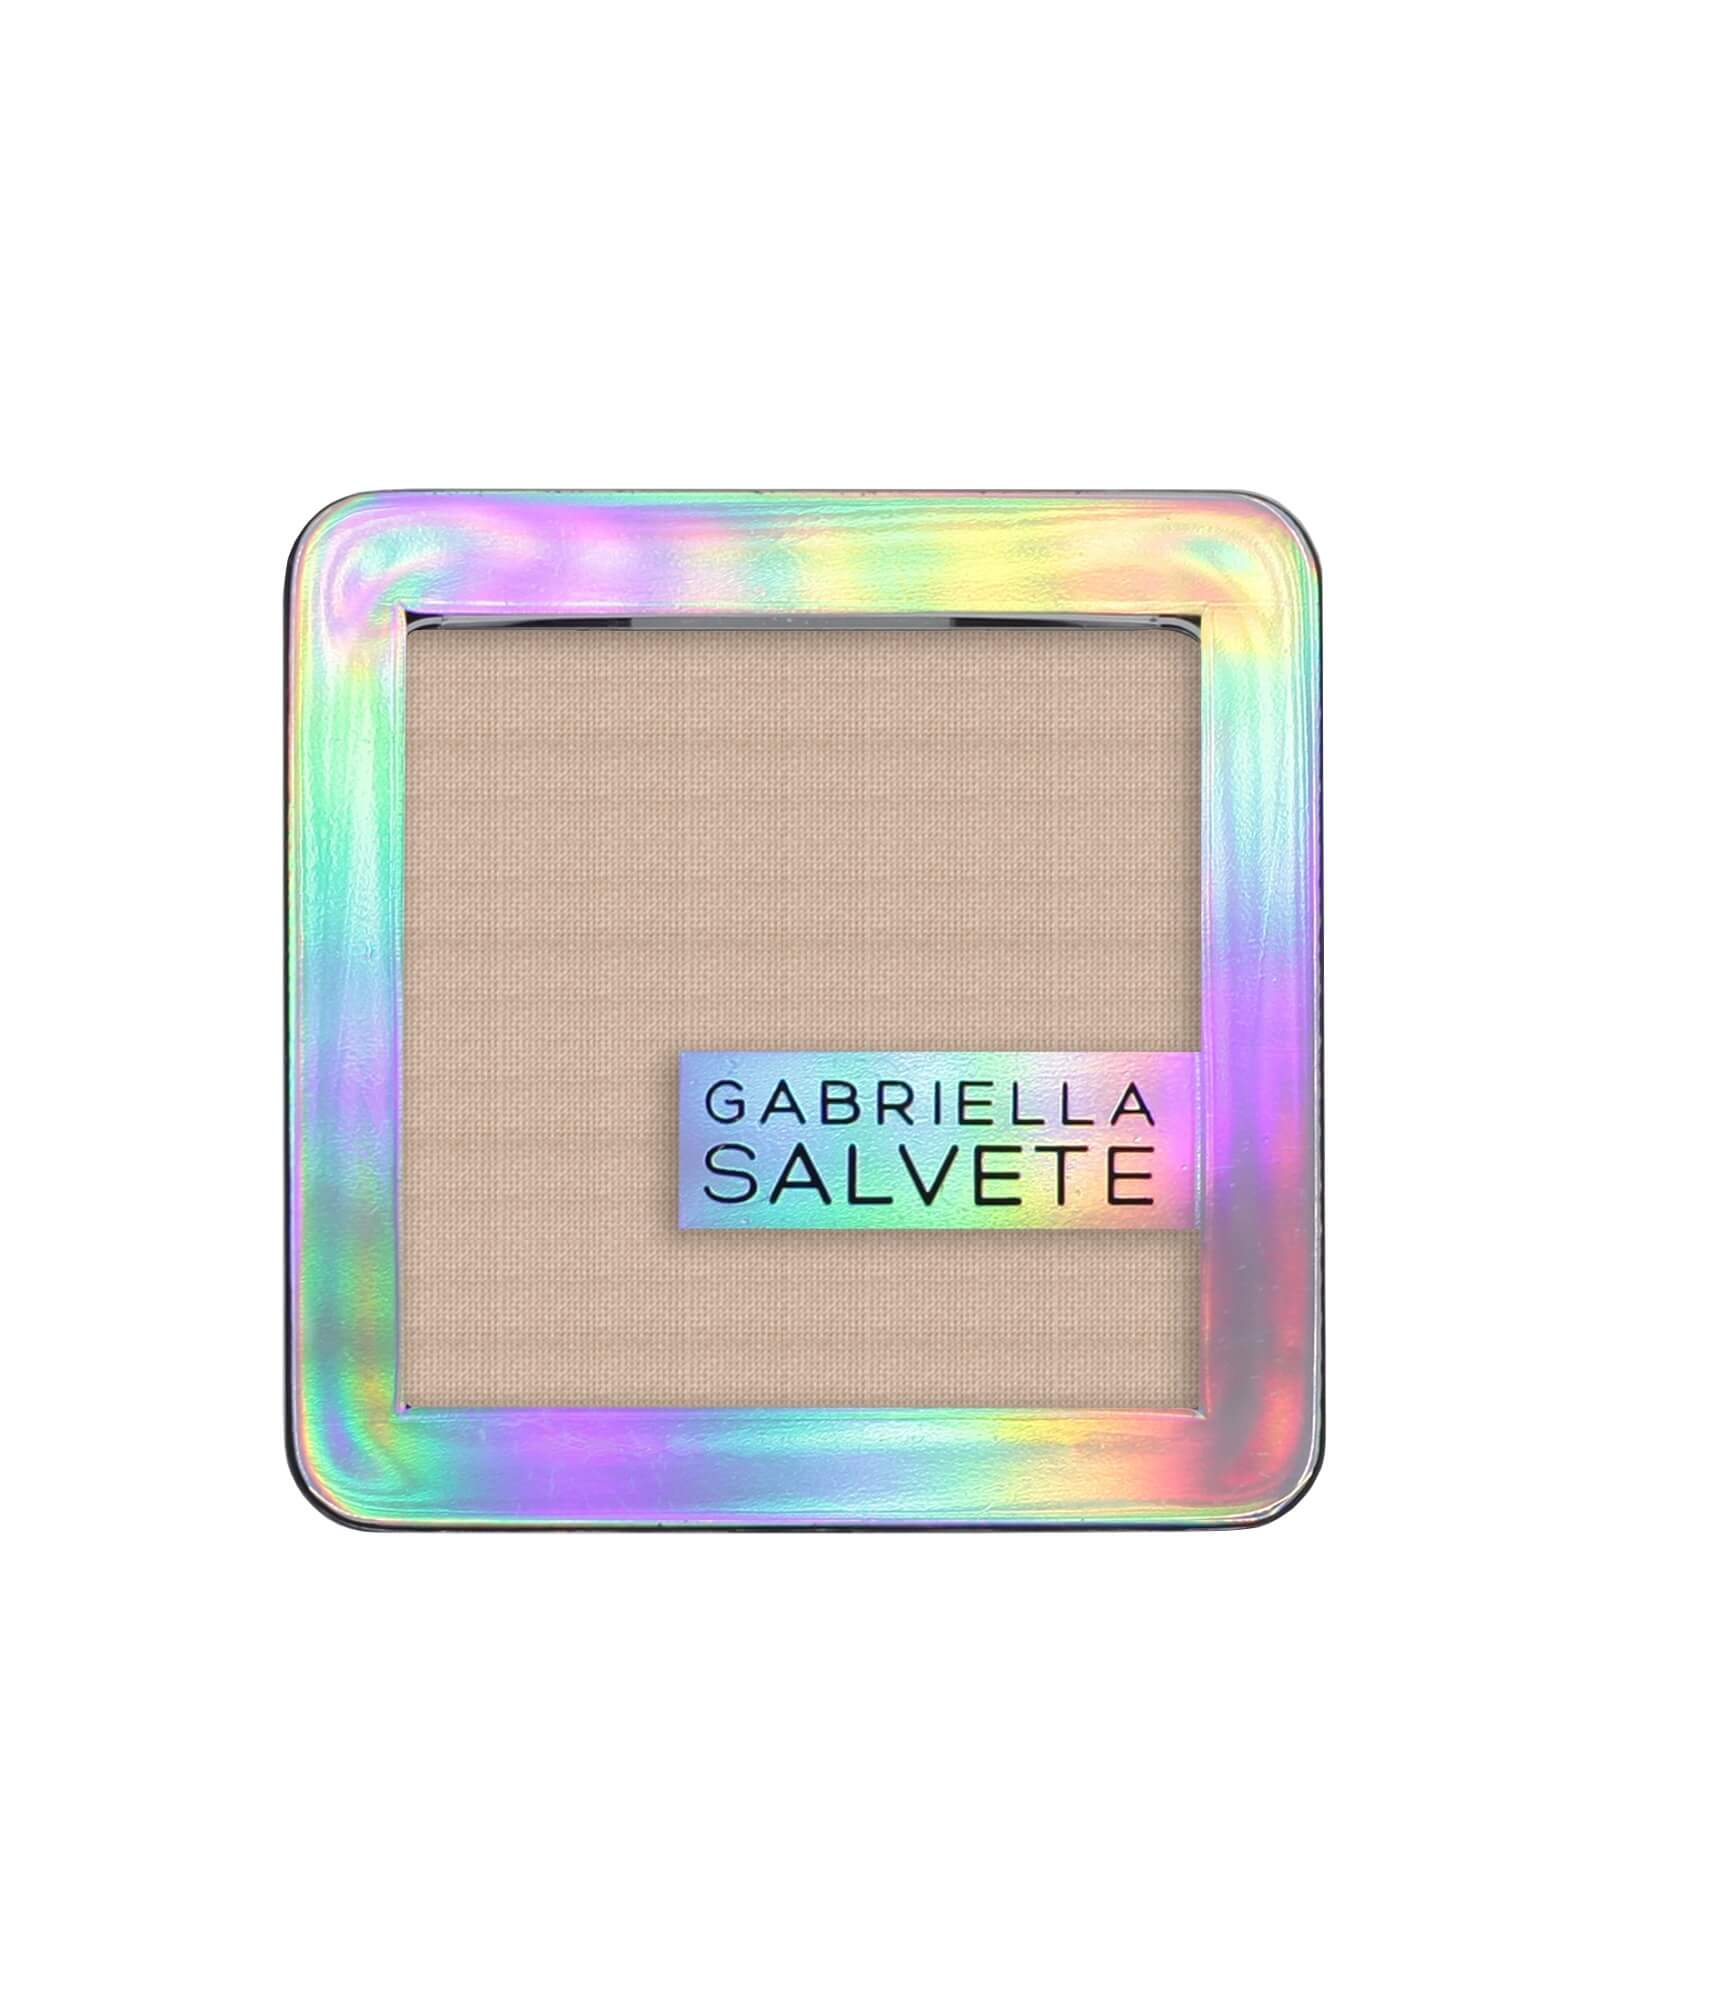 Gabriella Salvete Mono szemhéjfesték (Mono Eyeshadow) 2 g 03